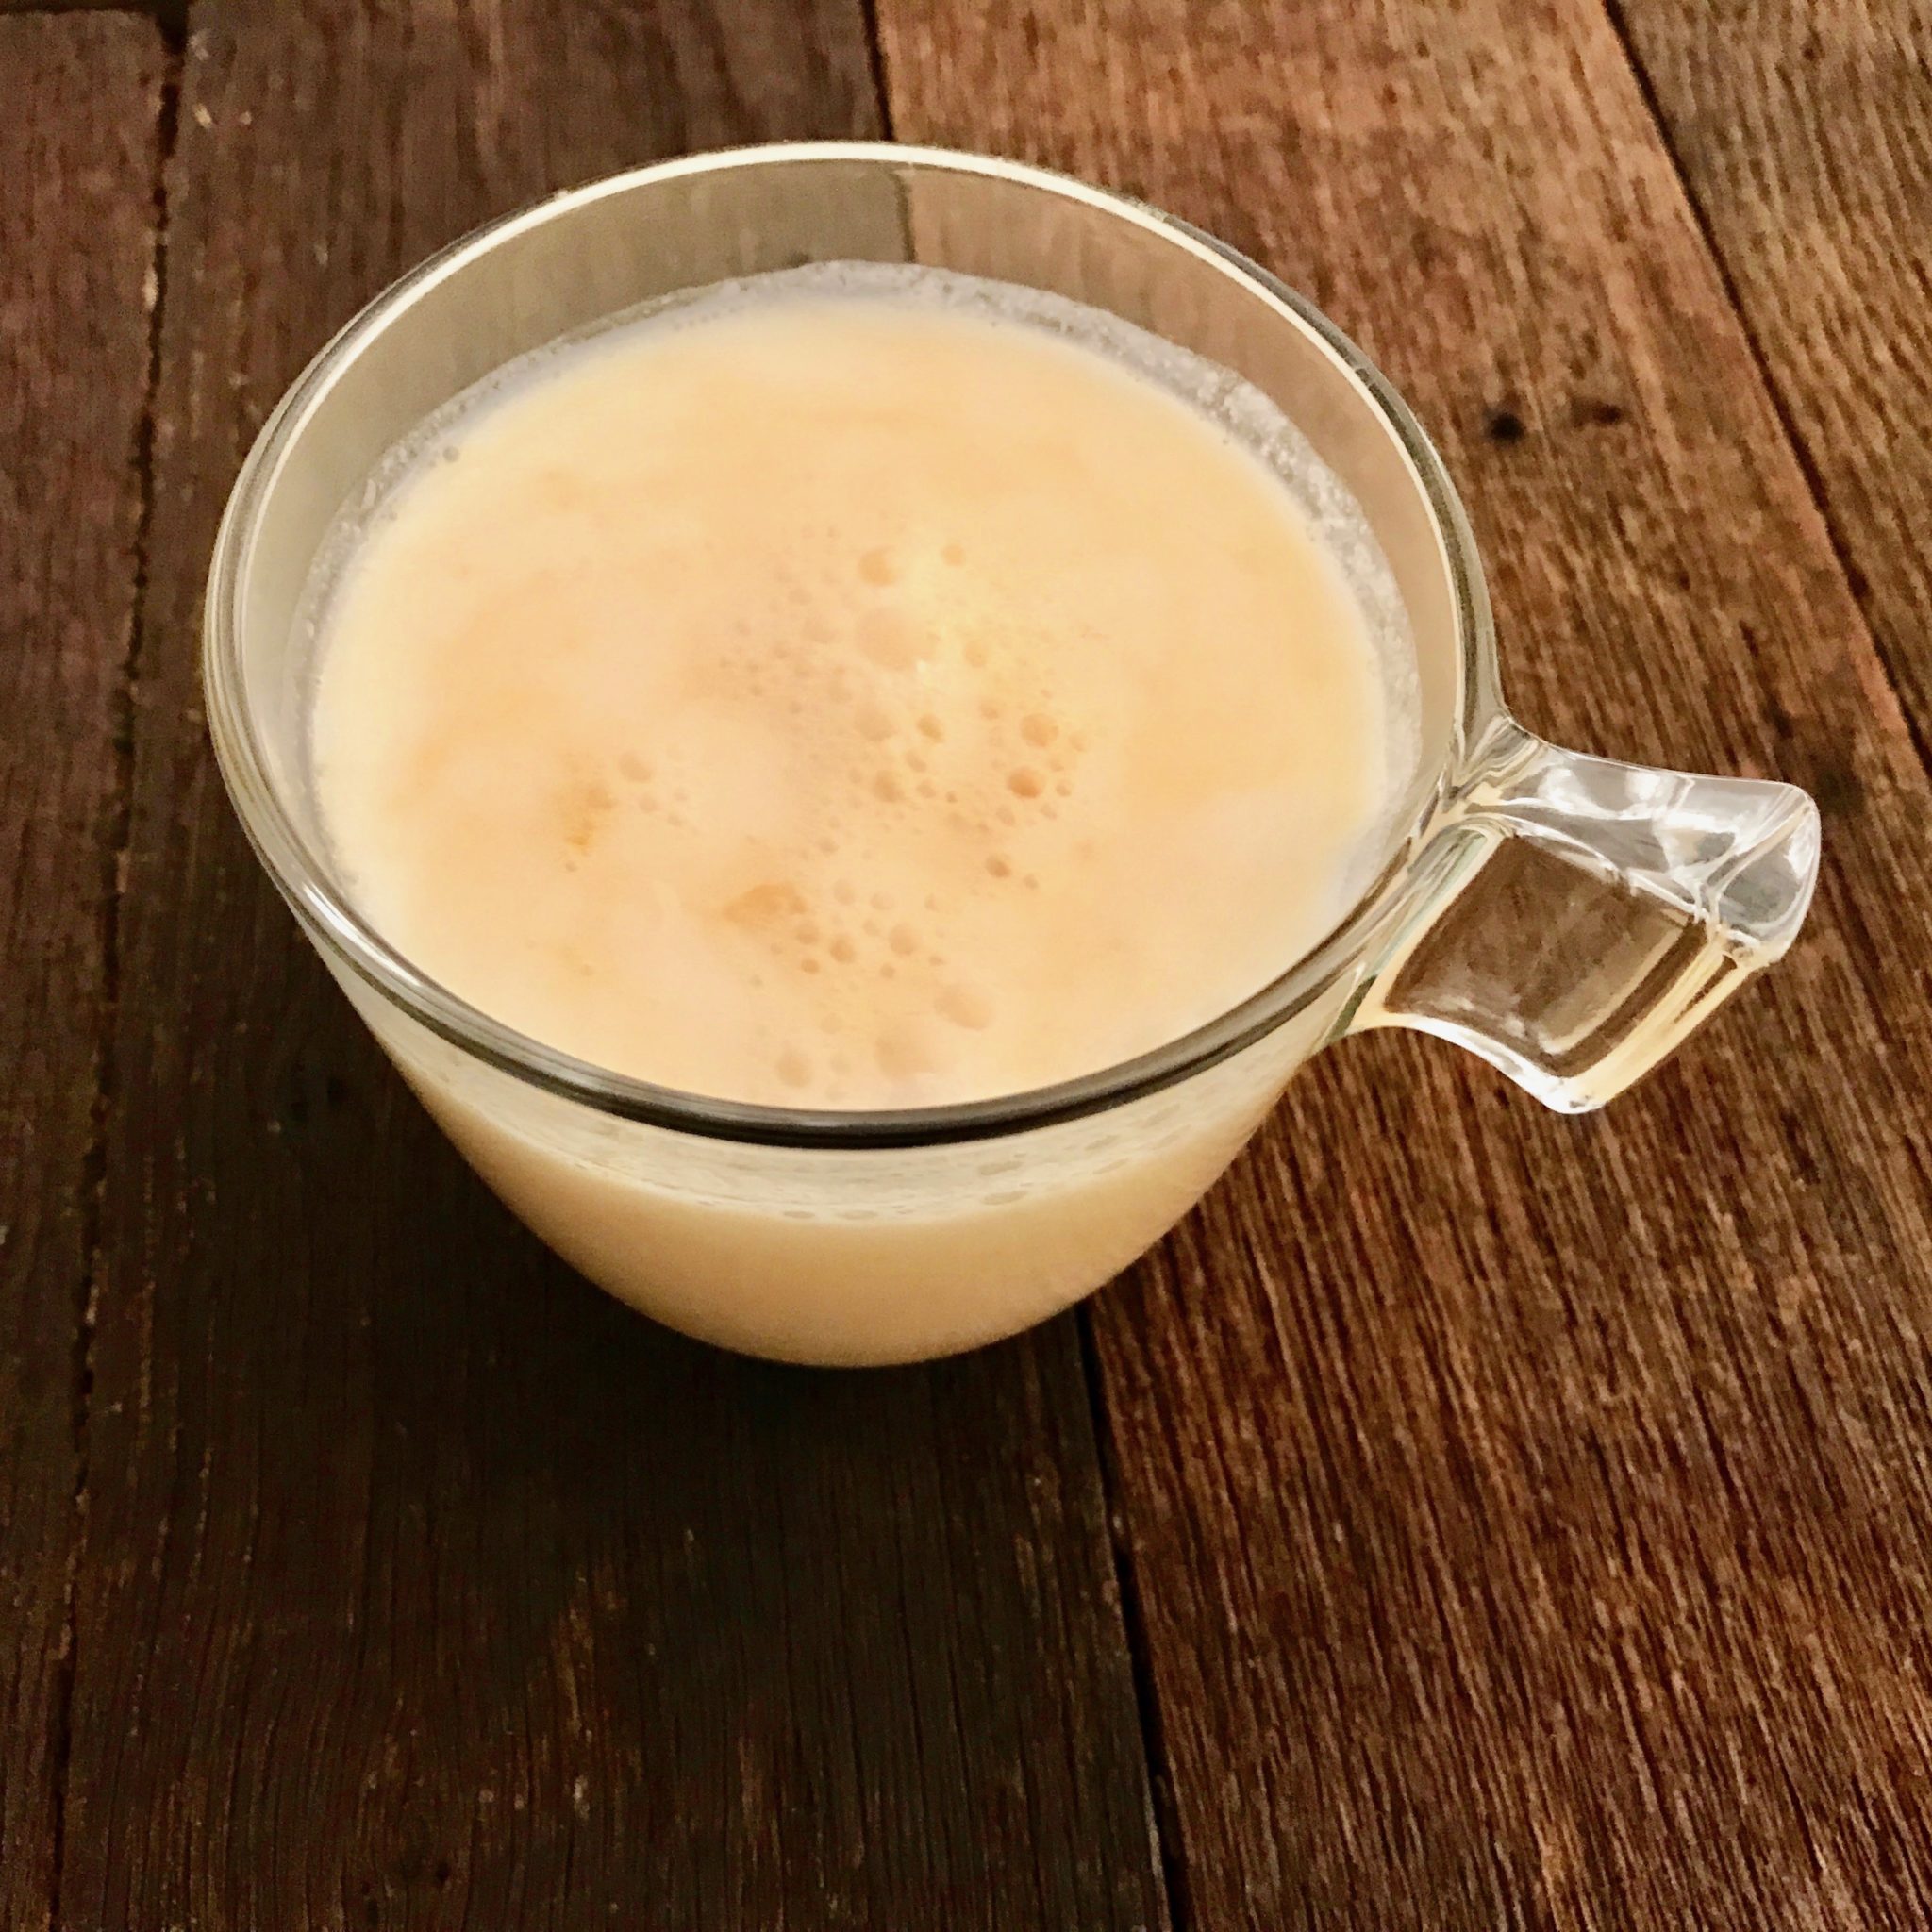 a glass of homemade kefir with orange juice